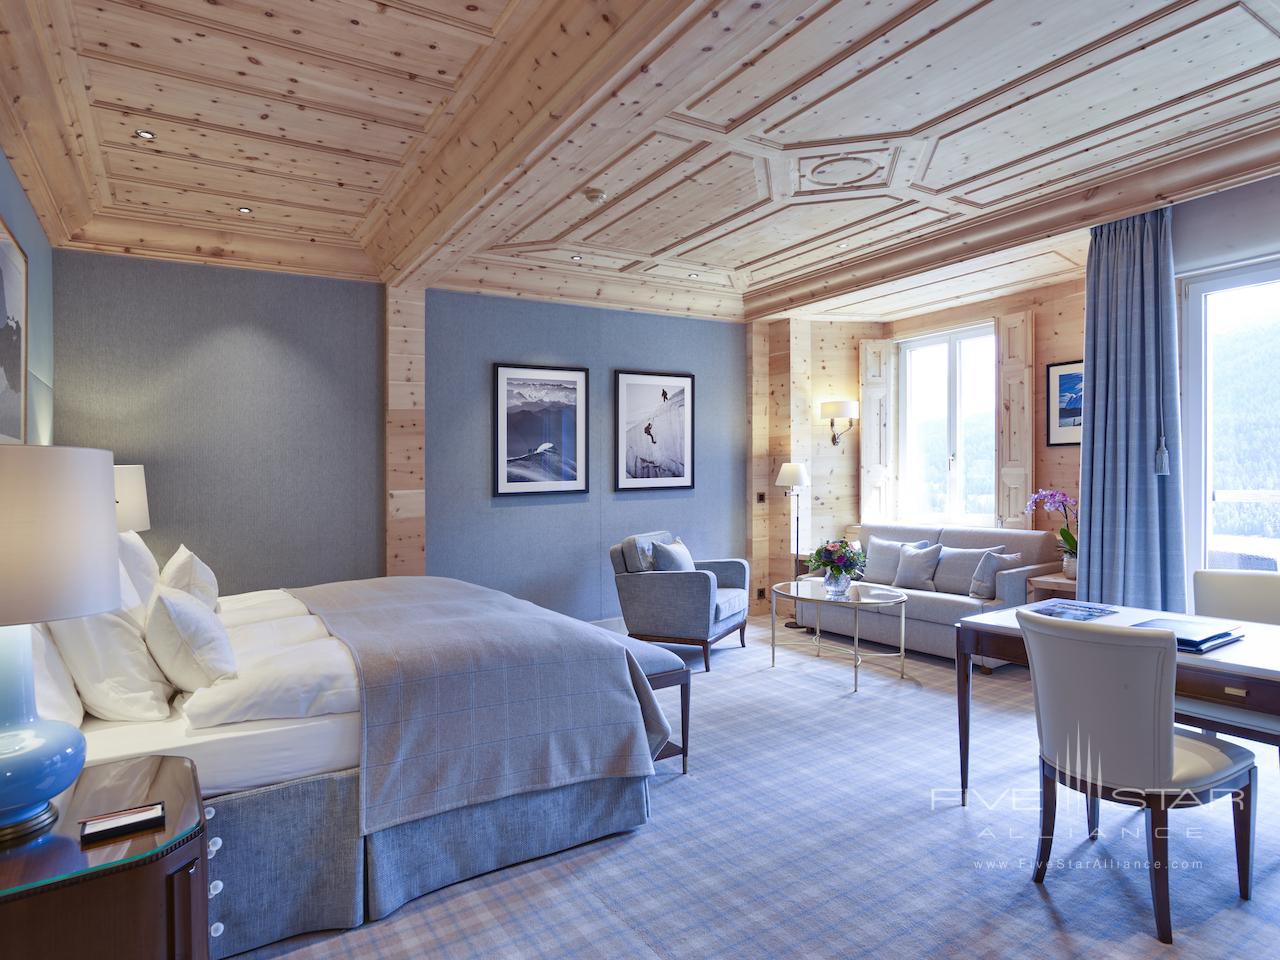 Kulm Hotel St Moritz